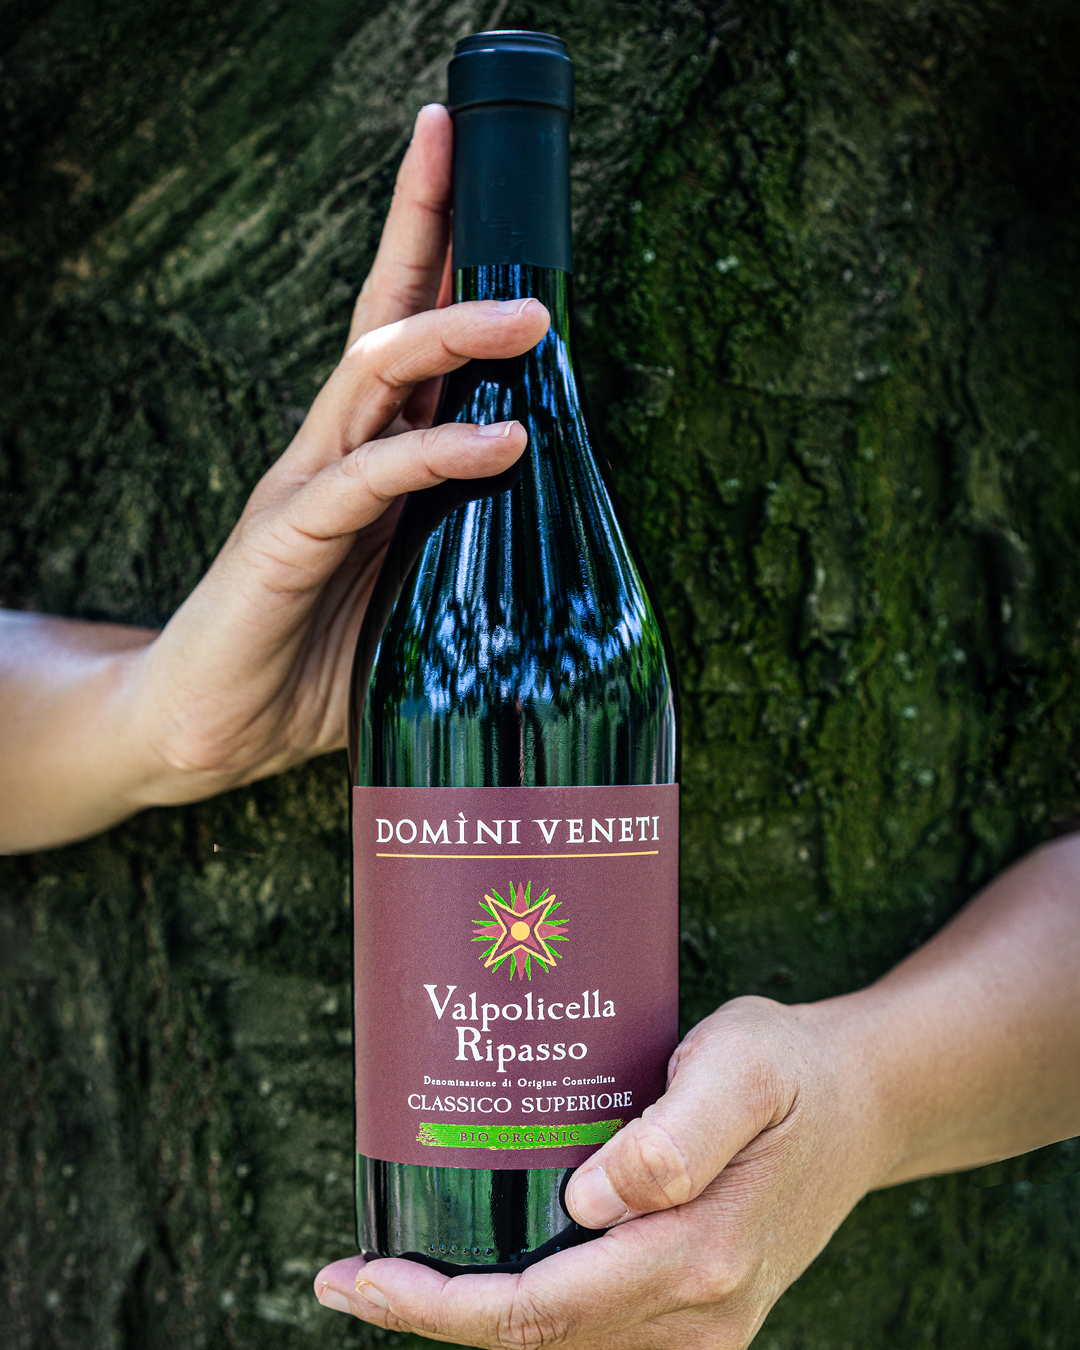 Domini Veneti wines